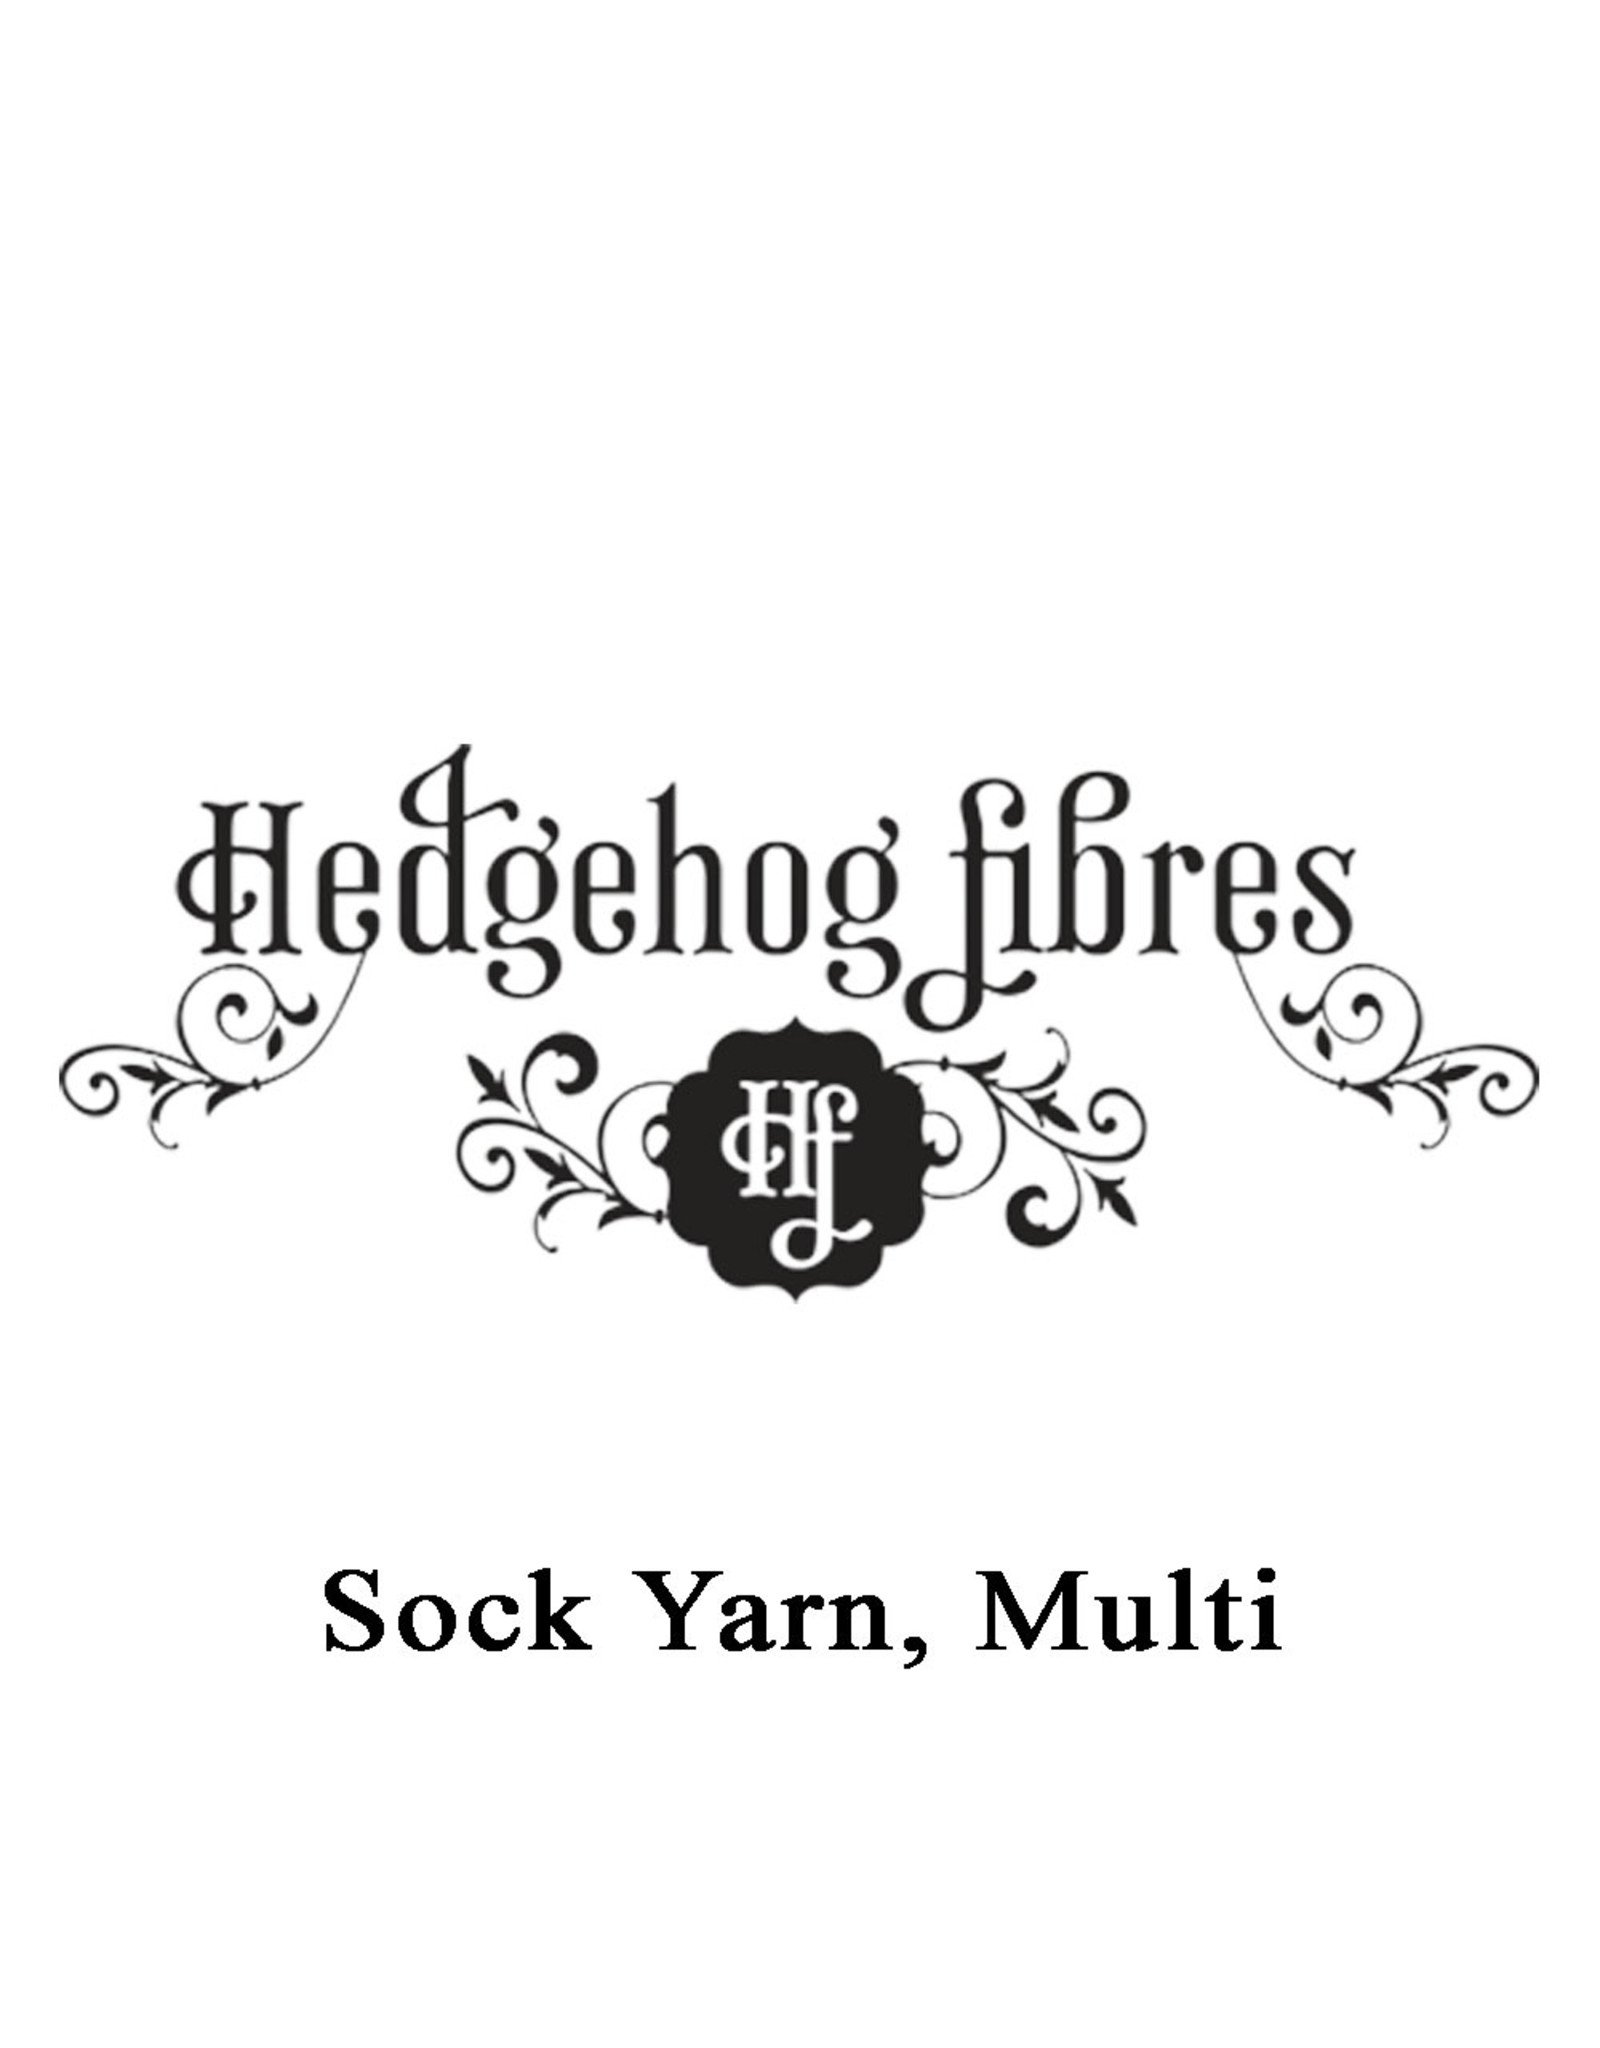 Hedgehog Fibres Hand Dyed Yarns Hedgehog Fibres Sock Yarn, Multi